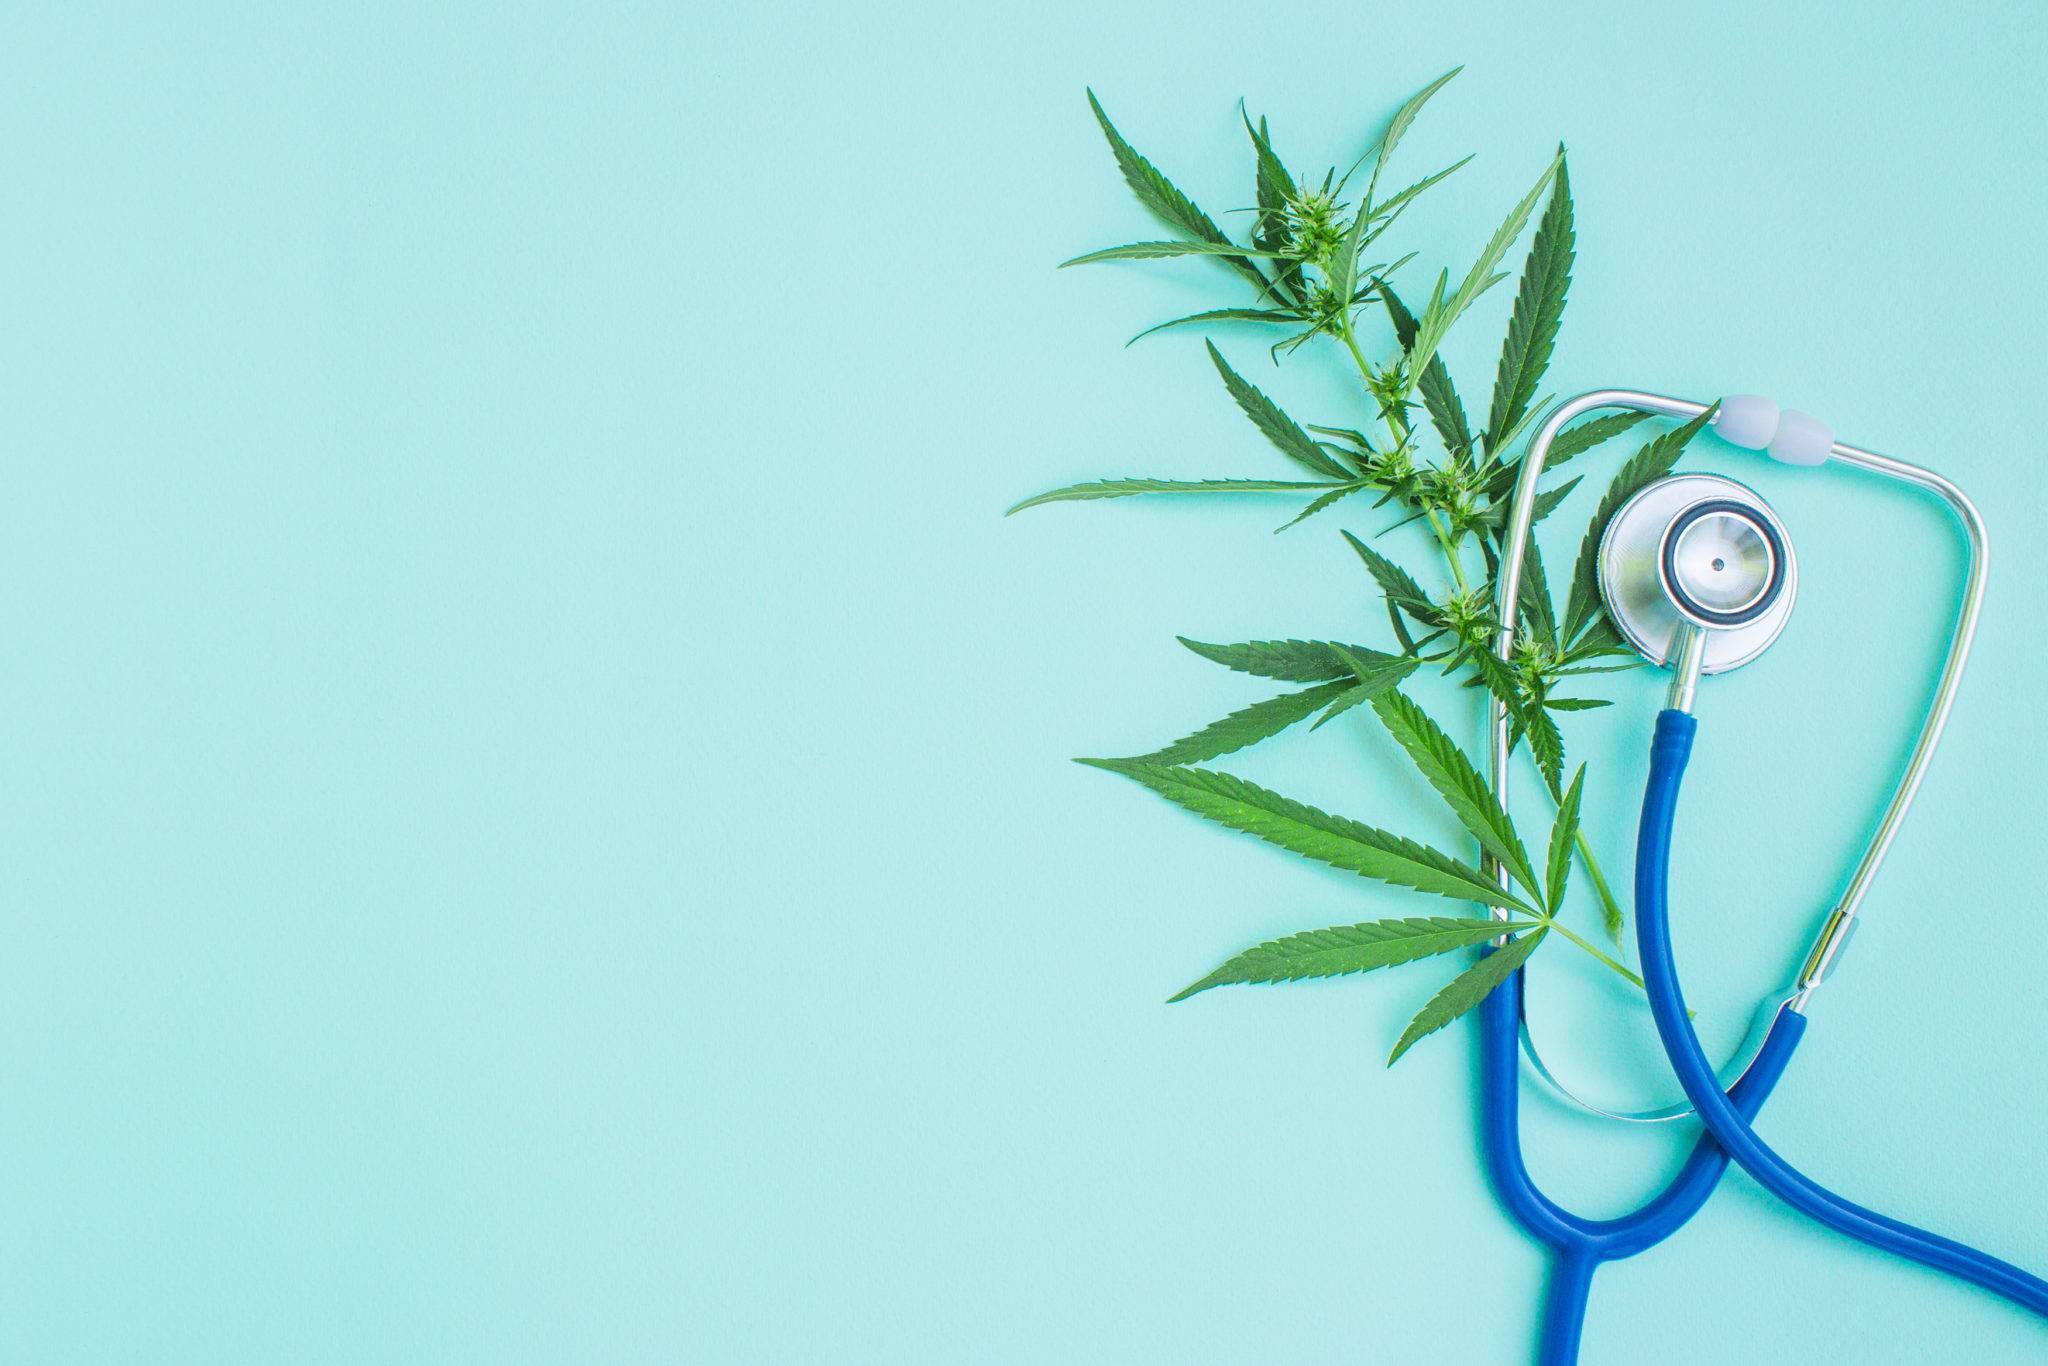 Florida Green Wellness Medical Marijuana Holistic Marijuana Doctor background